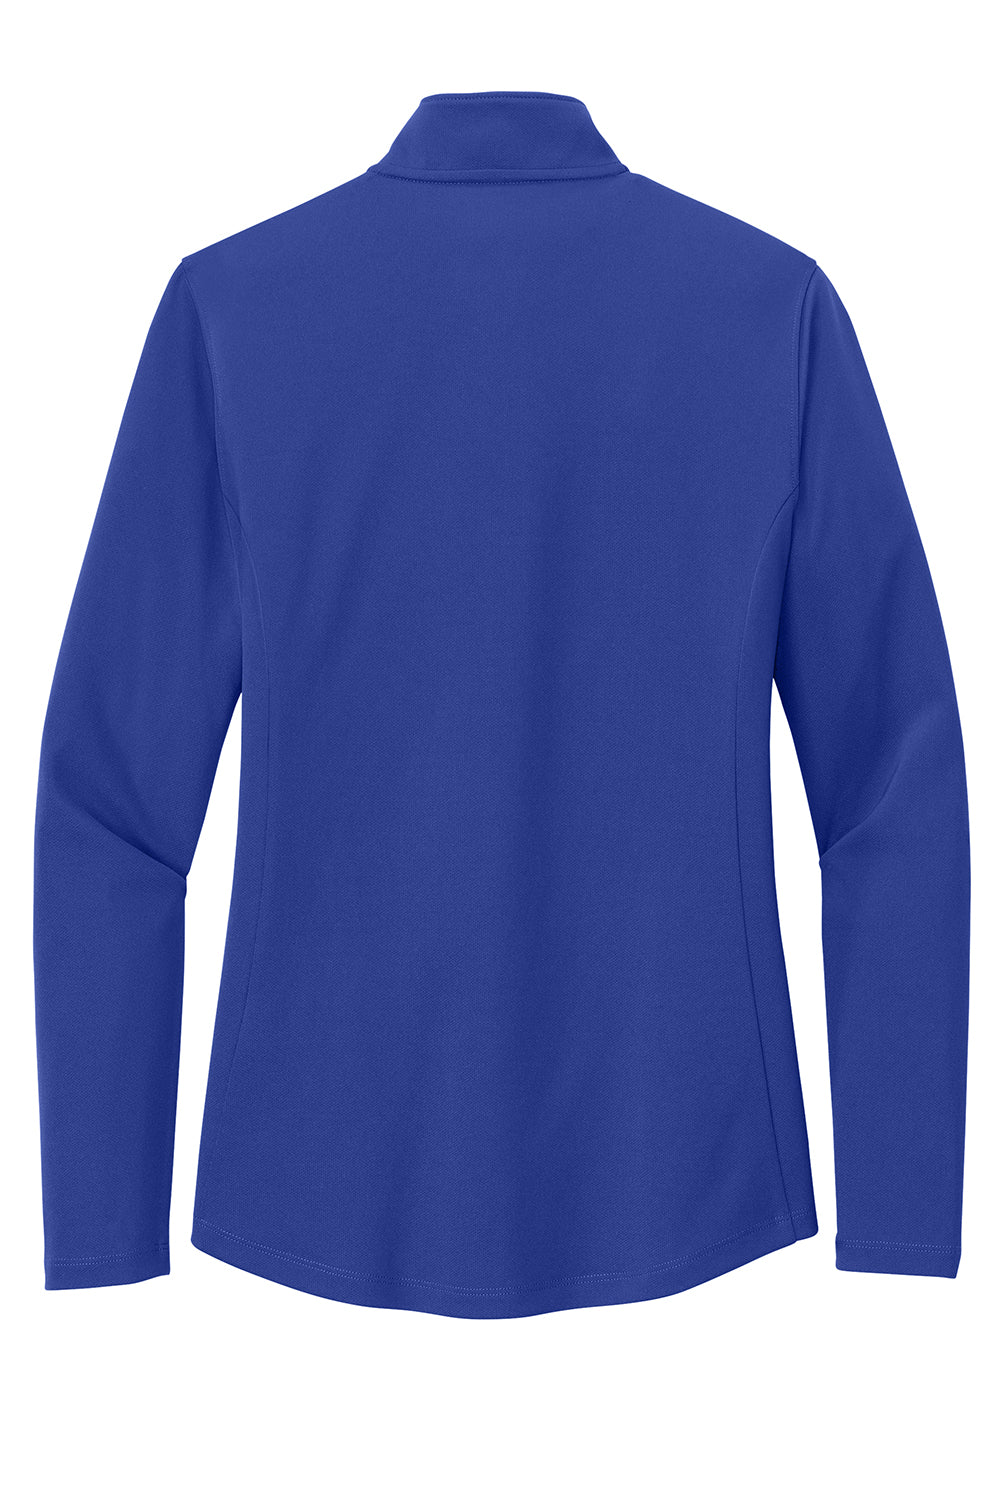 Port Authority LK112 Womens Dry Zone UV Micro Mesh 1/4 Zip Sweatshirt True Royal Blue Flat Back